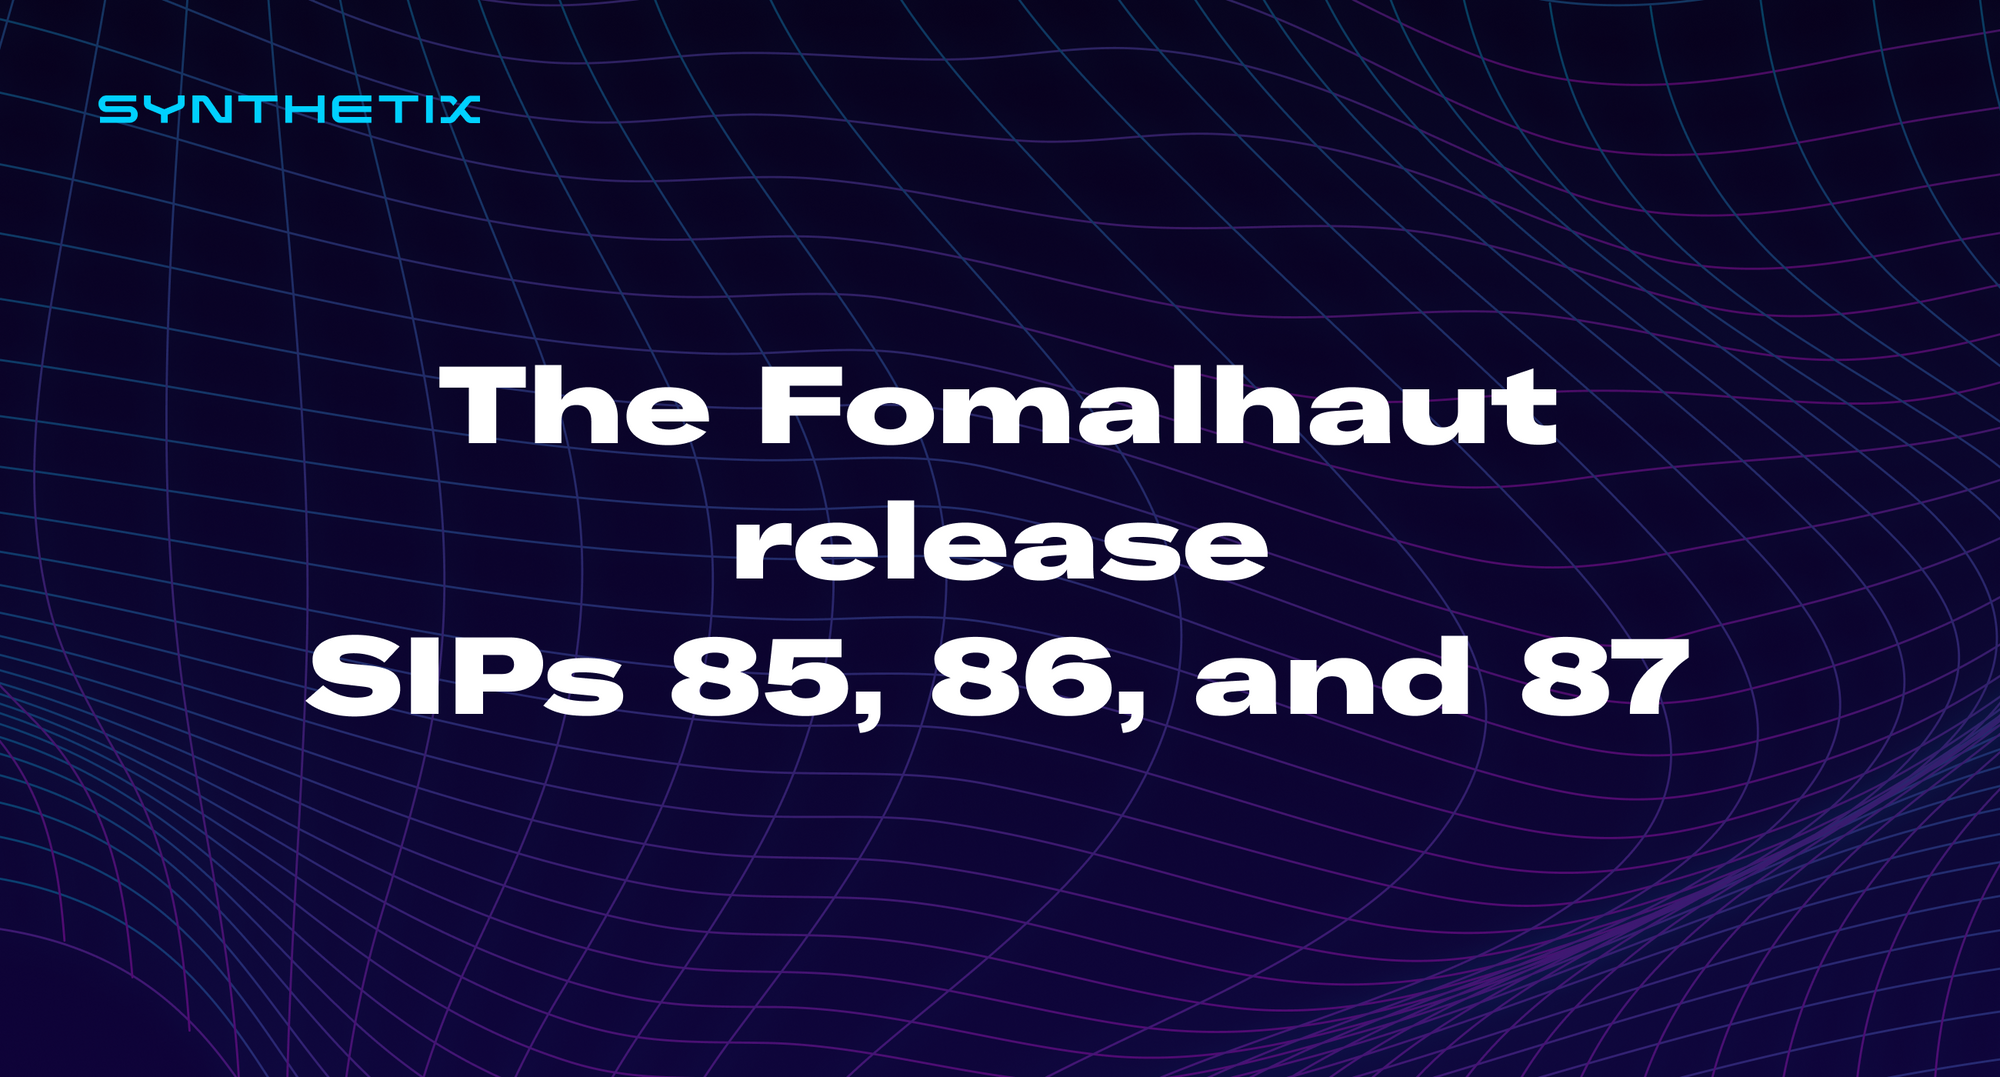 The Fomalhaut release